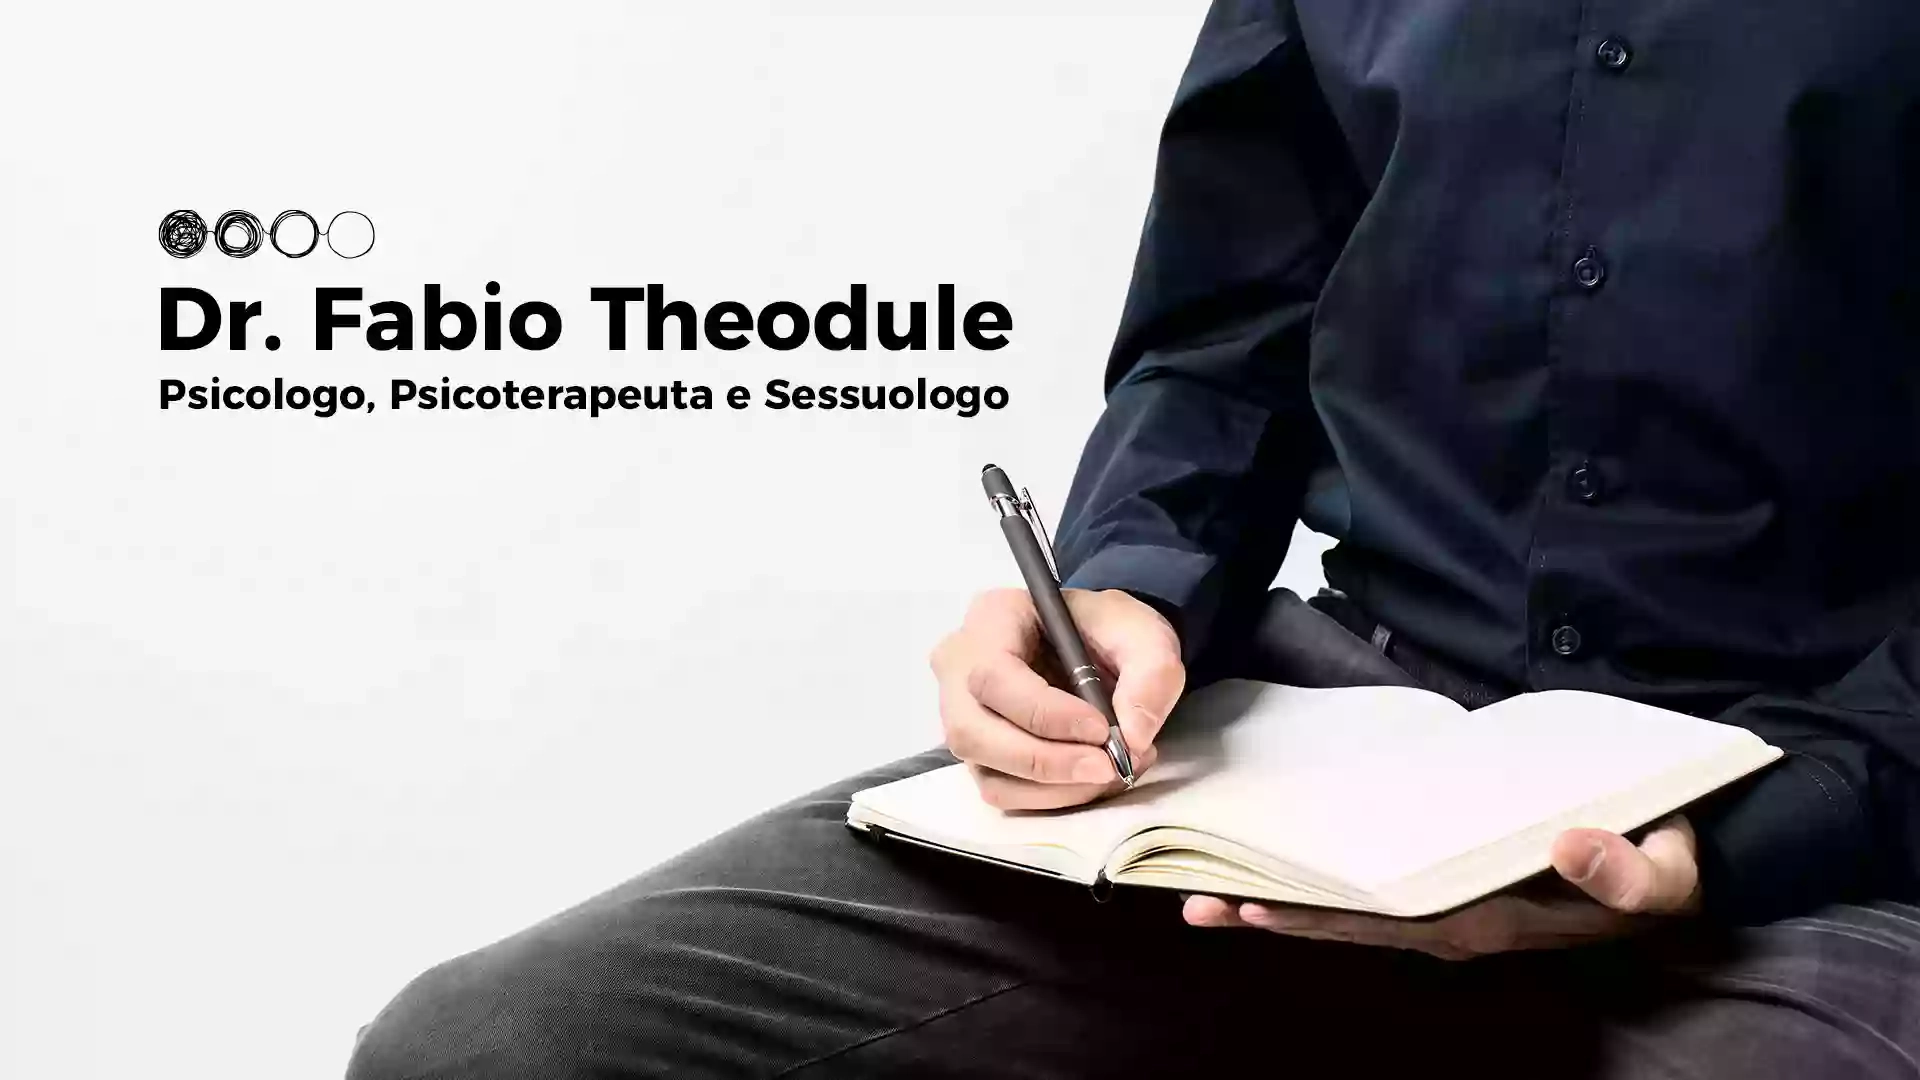 Dr. Fabio Theodule